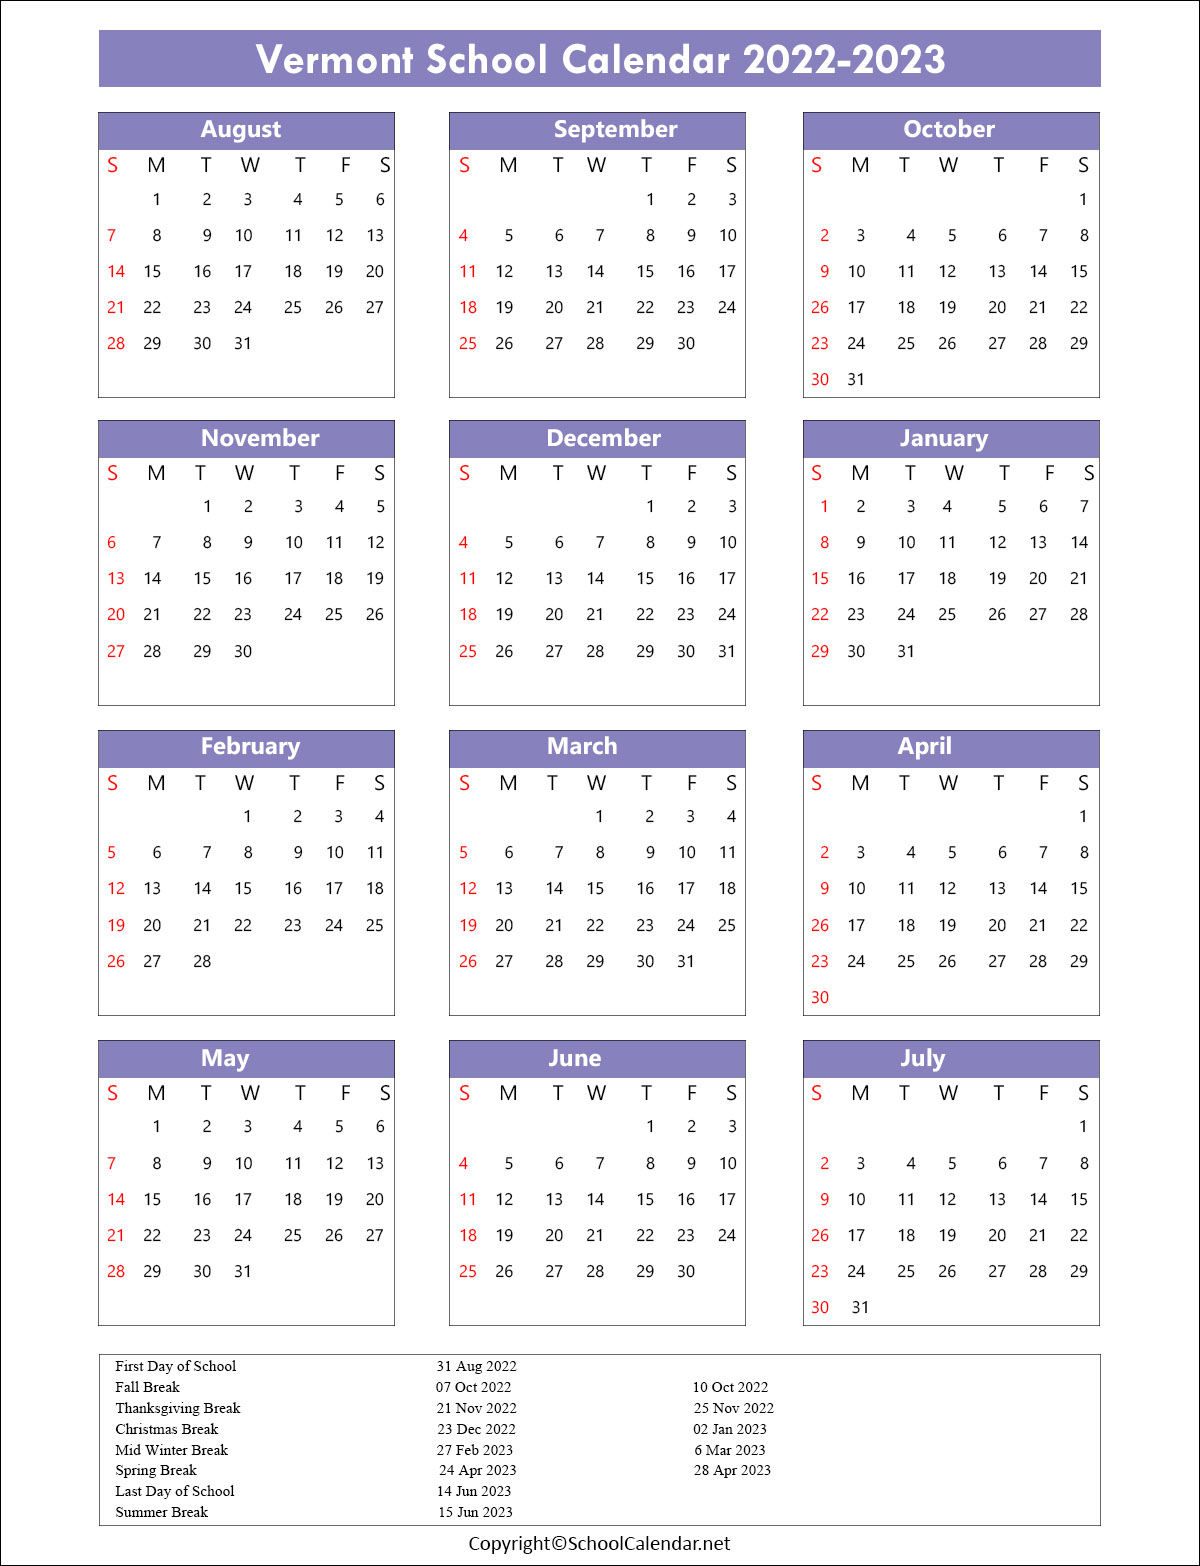 Vermont School Calendar 2022